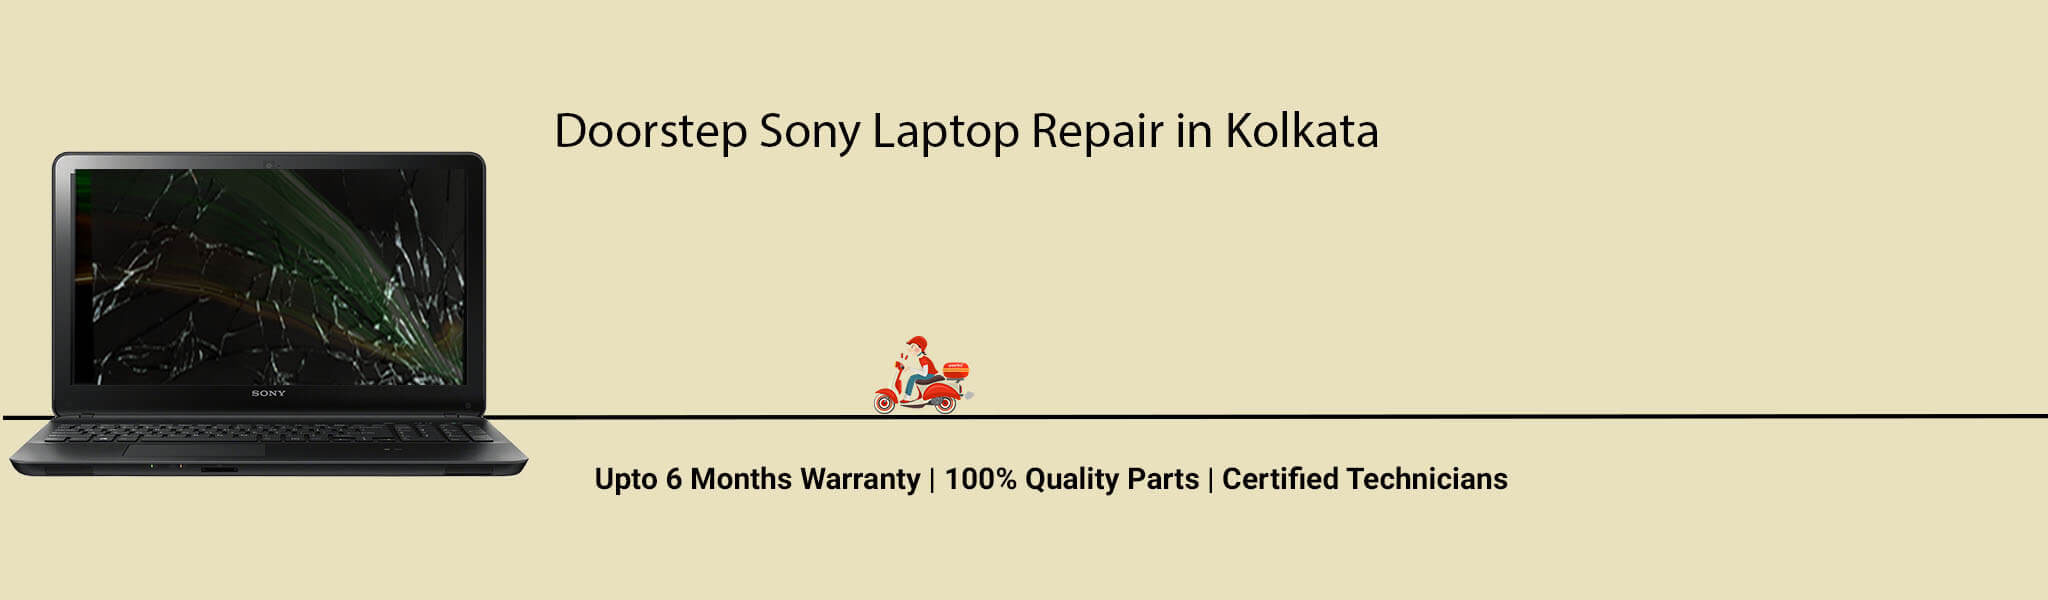 sony-laptop-banner-kolkata.jpg